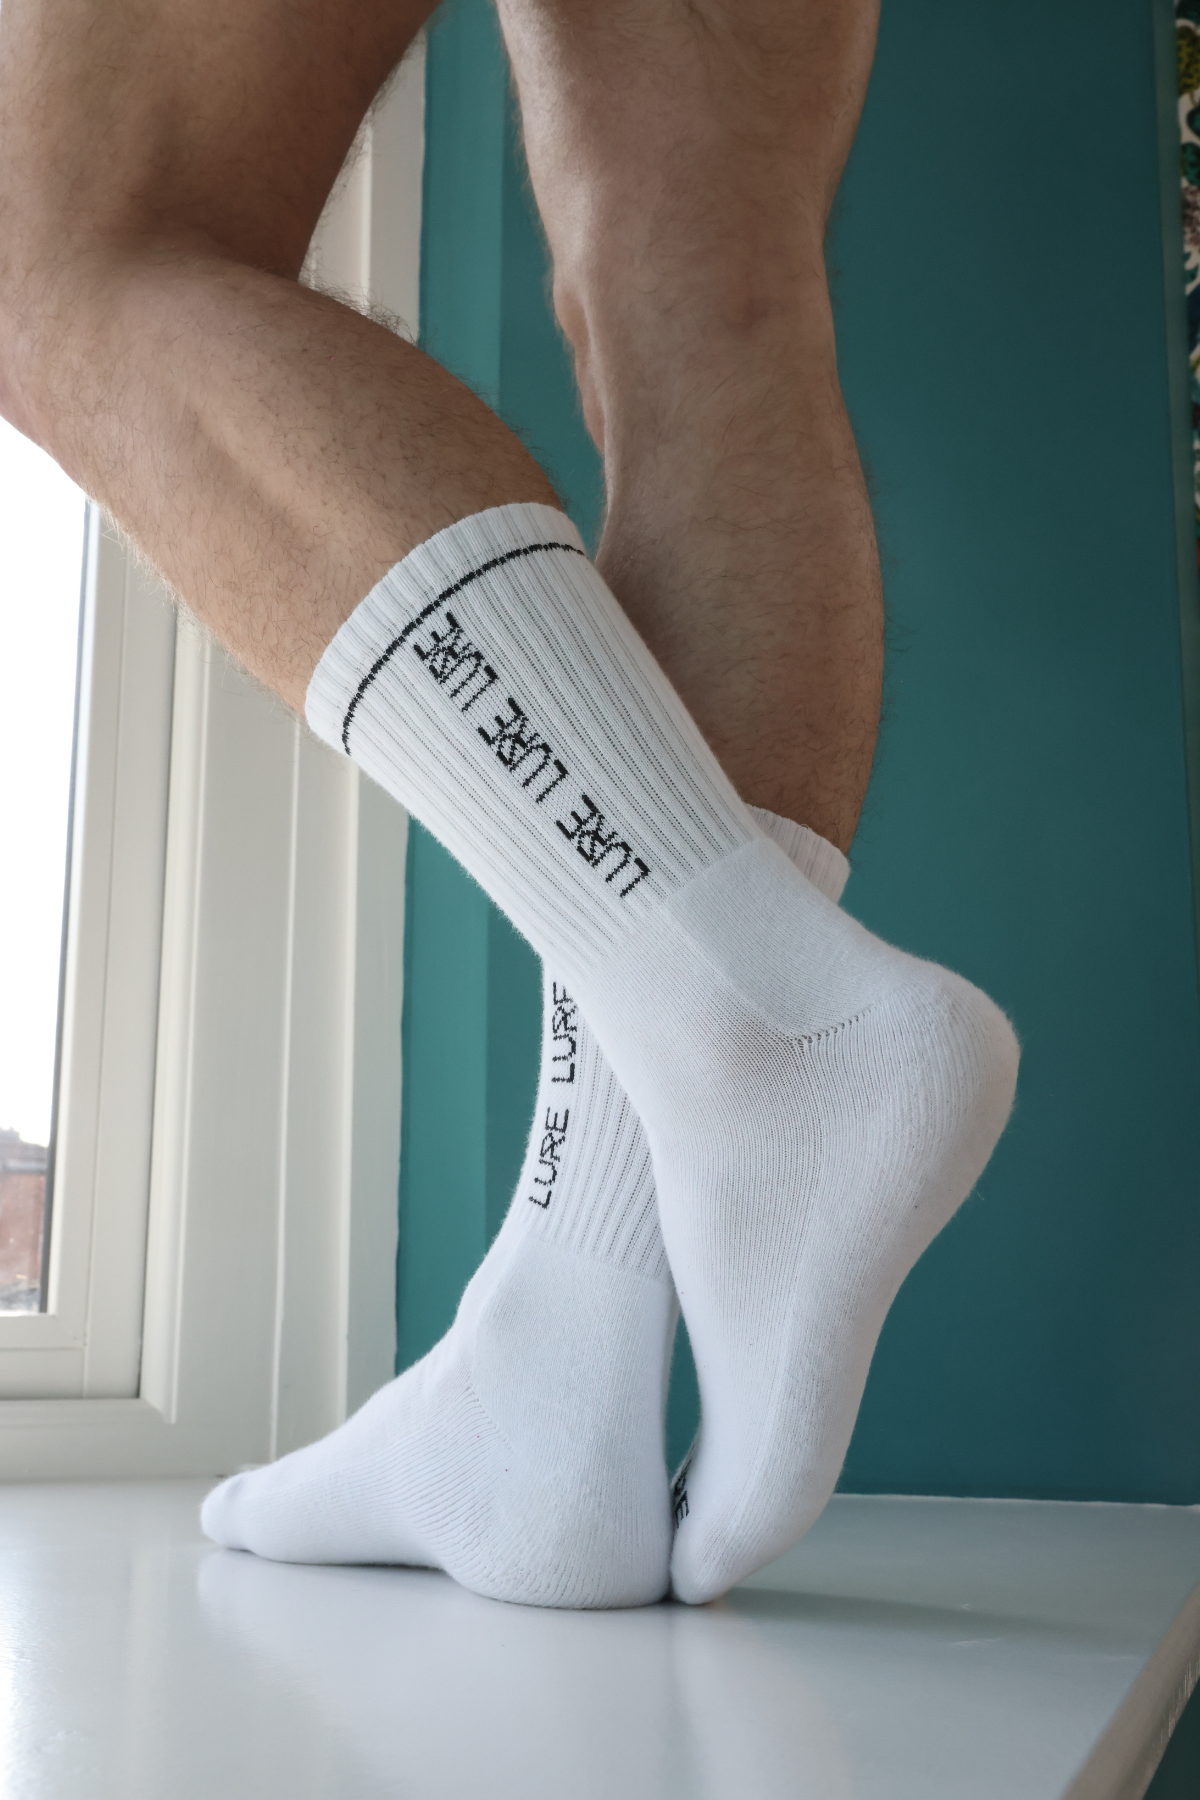 Lure Lineup Socks - White/Black